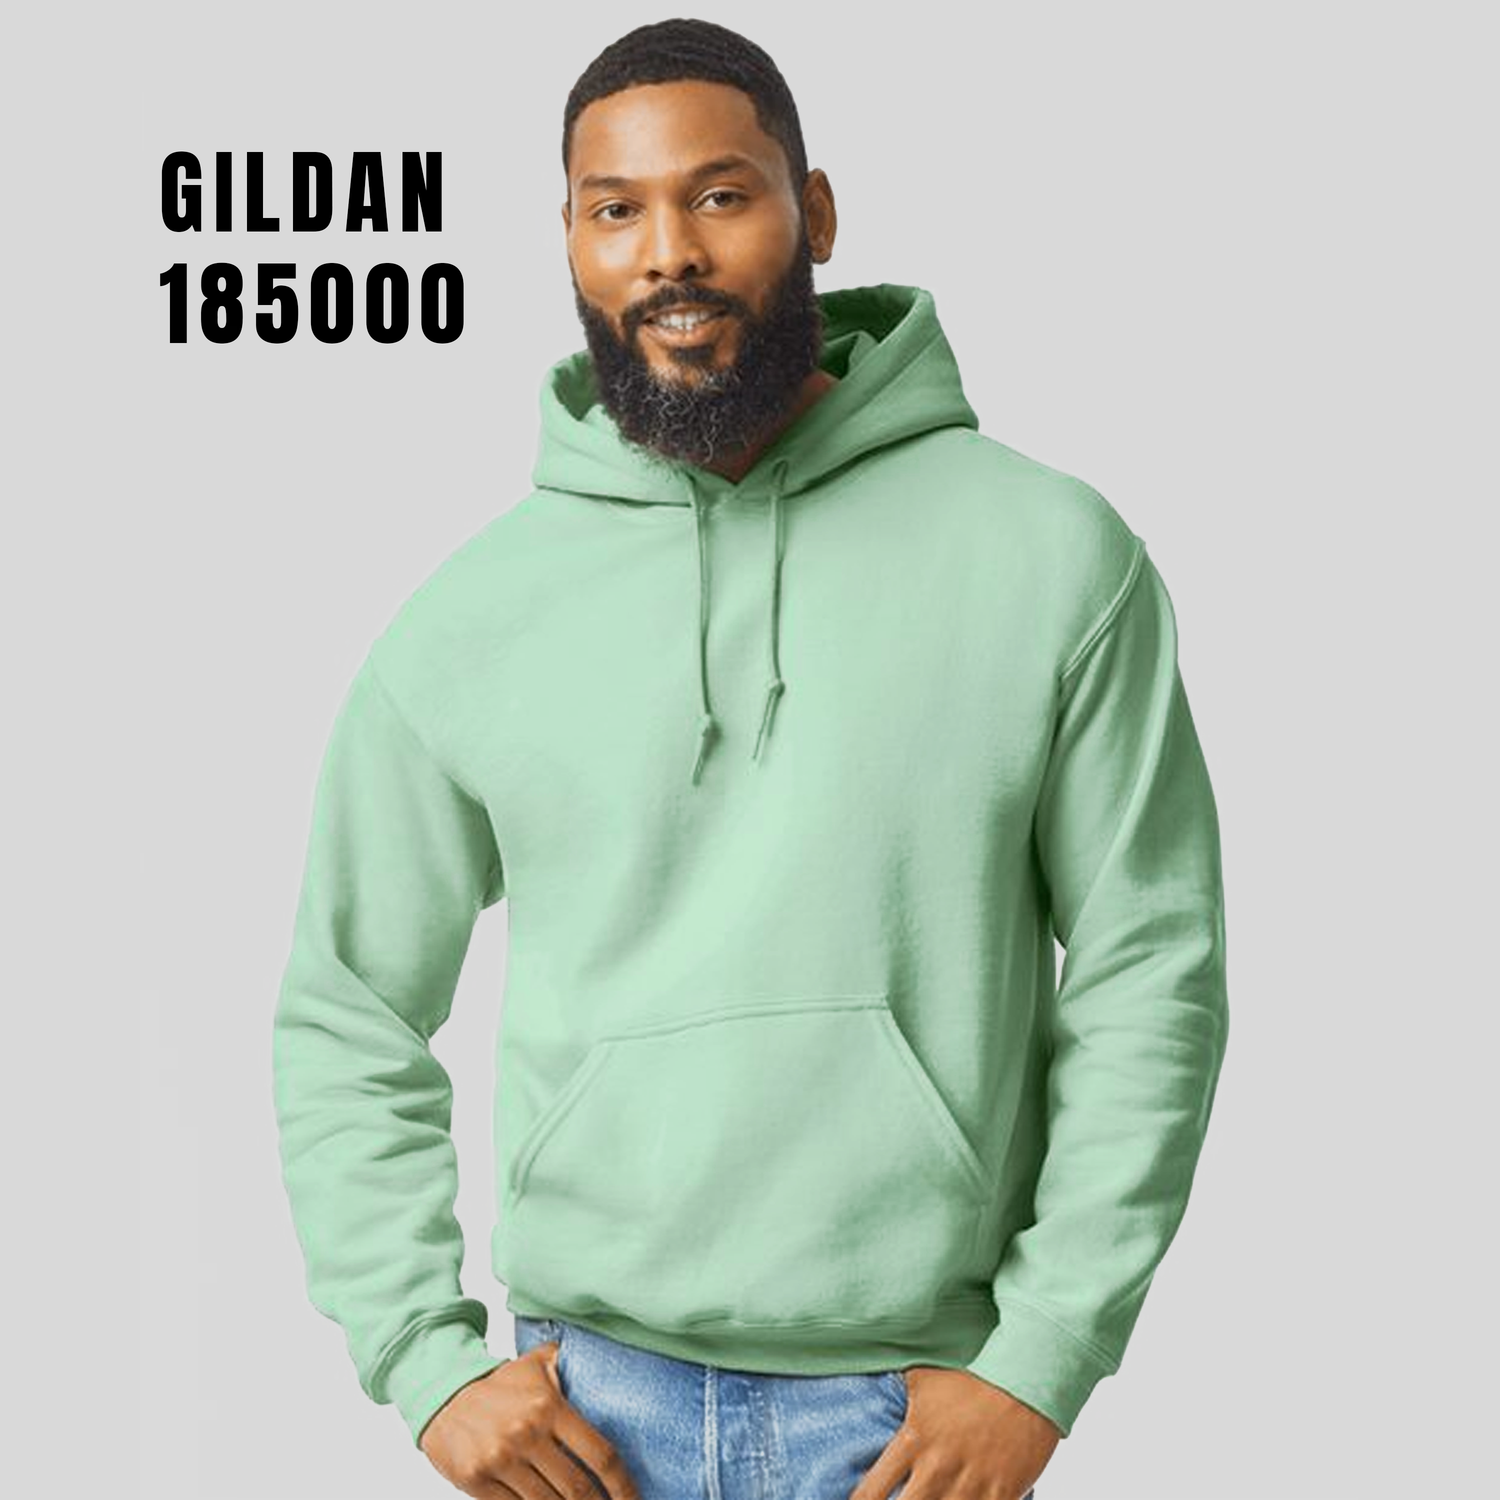 Gildan185000